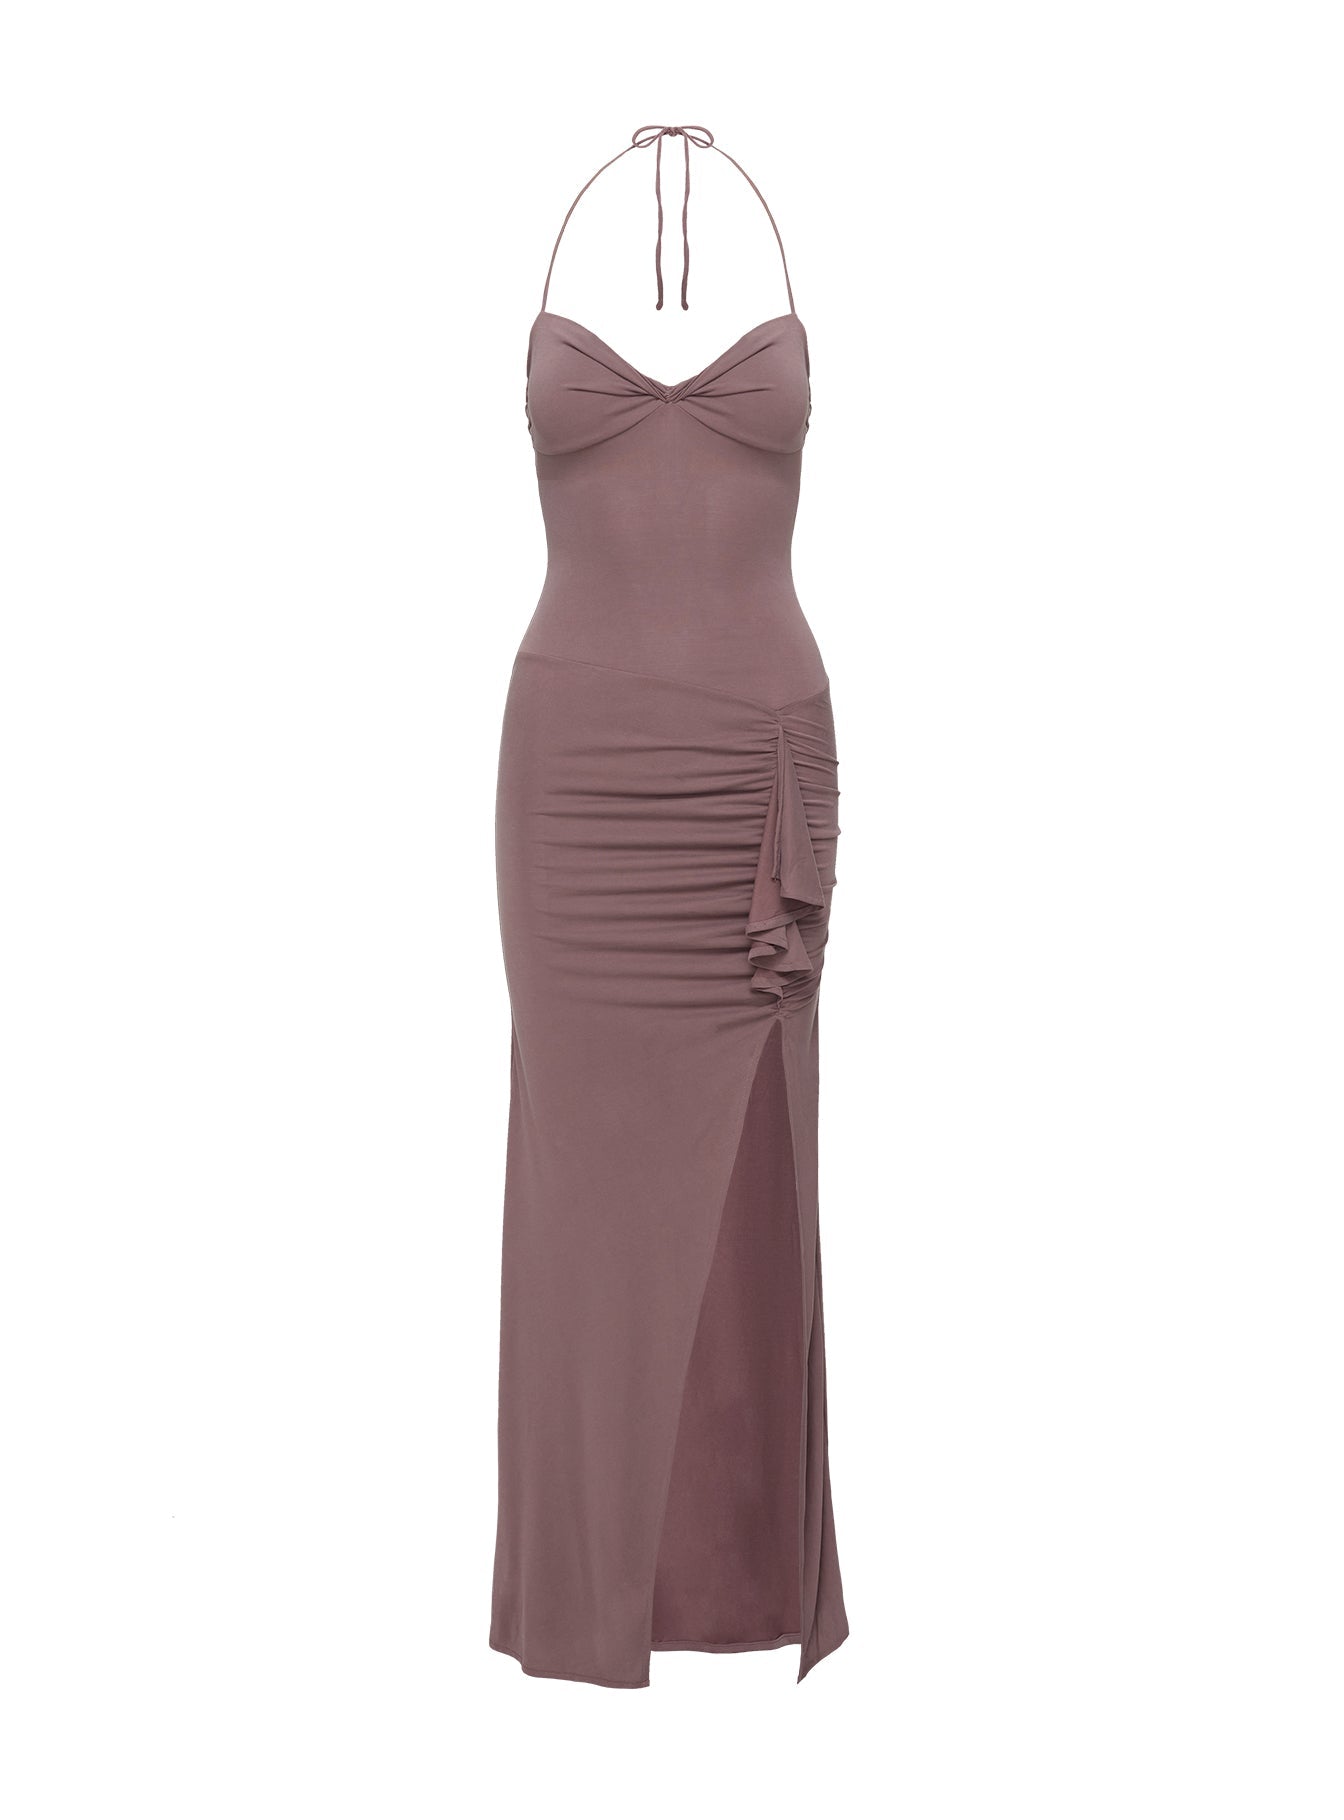 Shop Formal Dress - Destinations Maxi Dress Mauve Curve third image